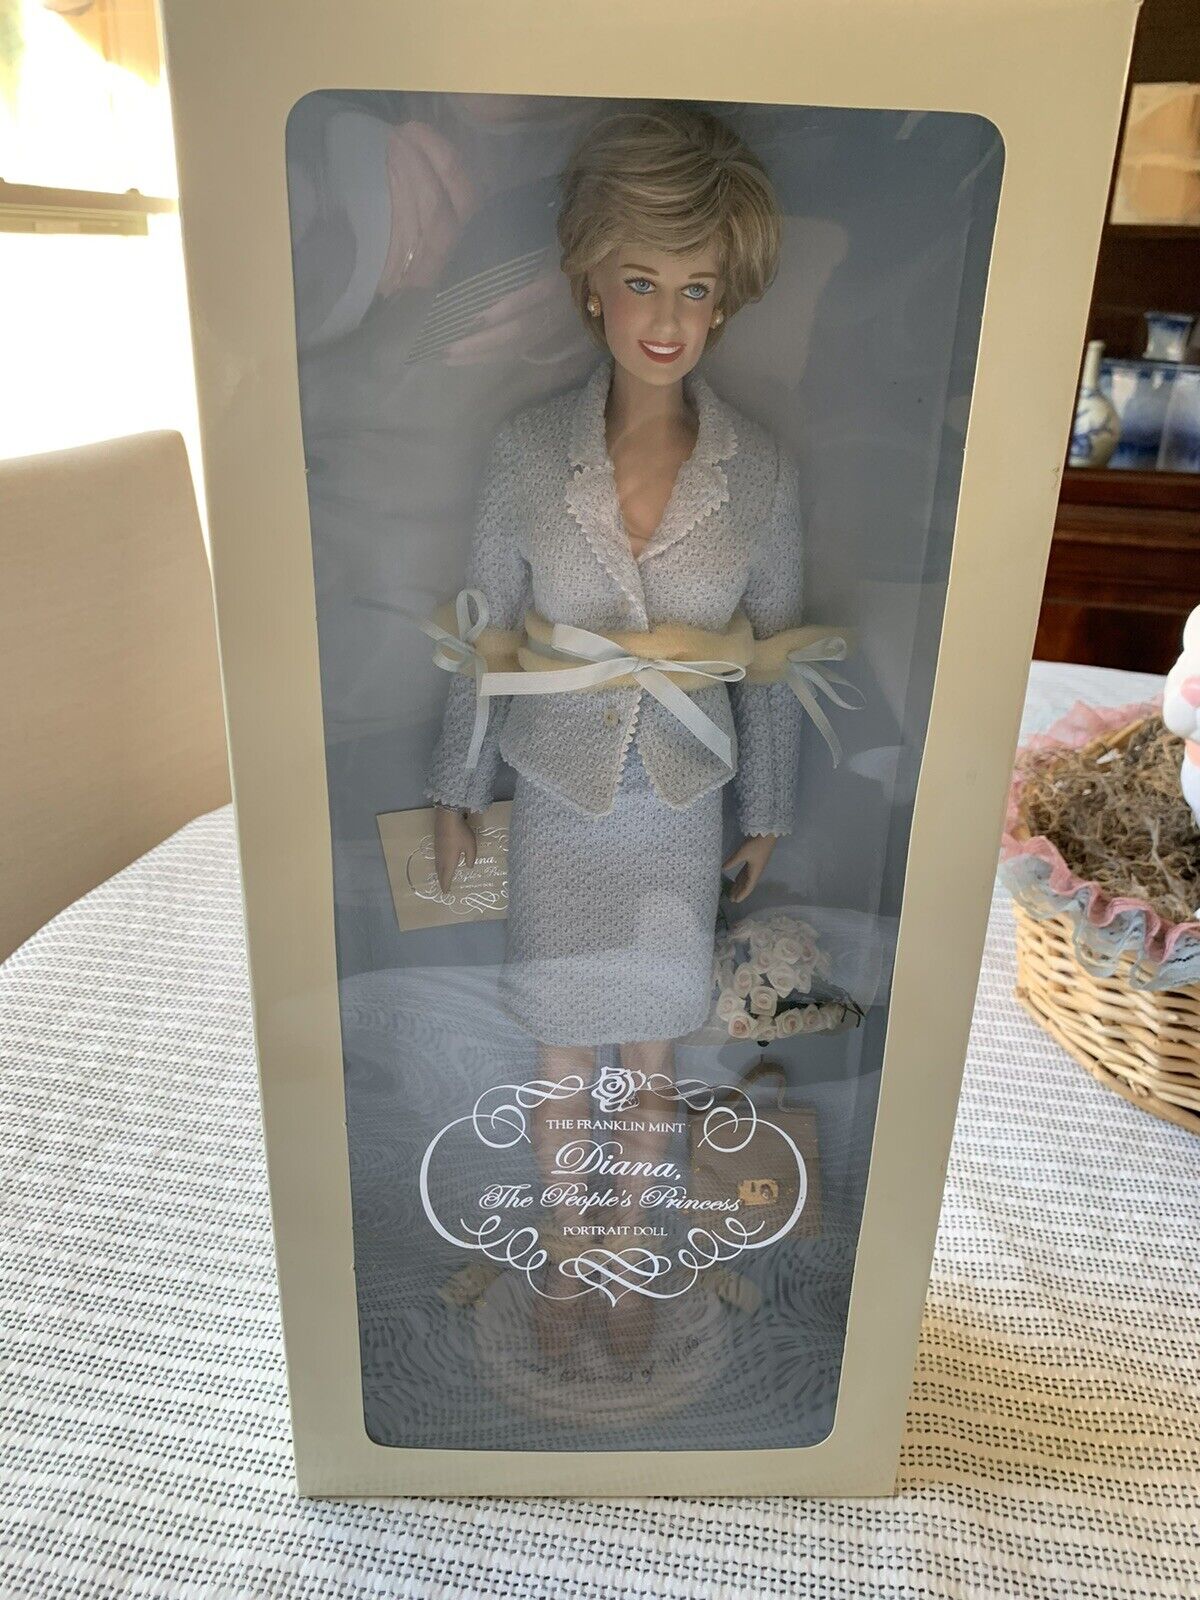 Franklin Mint Princess Diana 'The People's Princess' Portrait Doll in Box